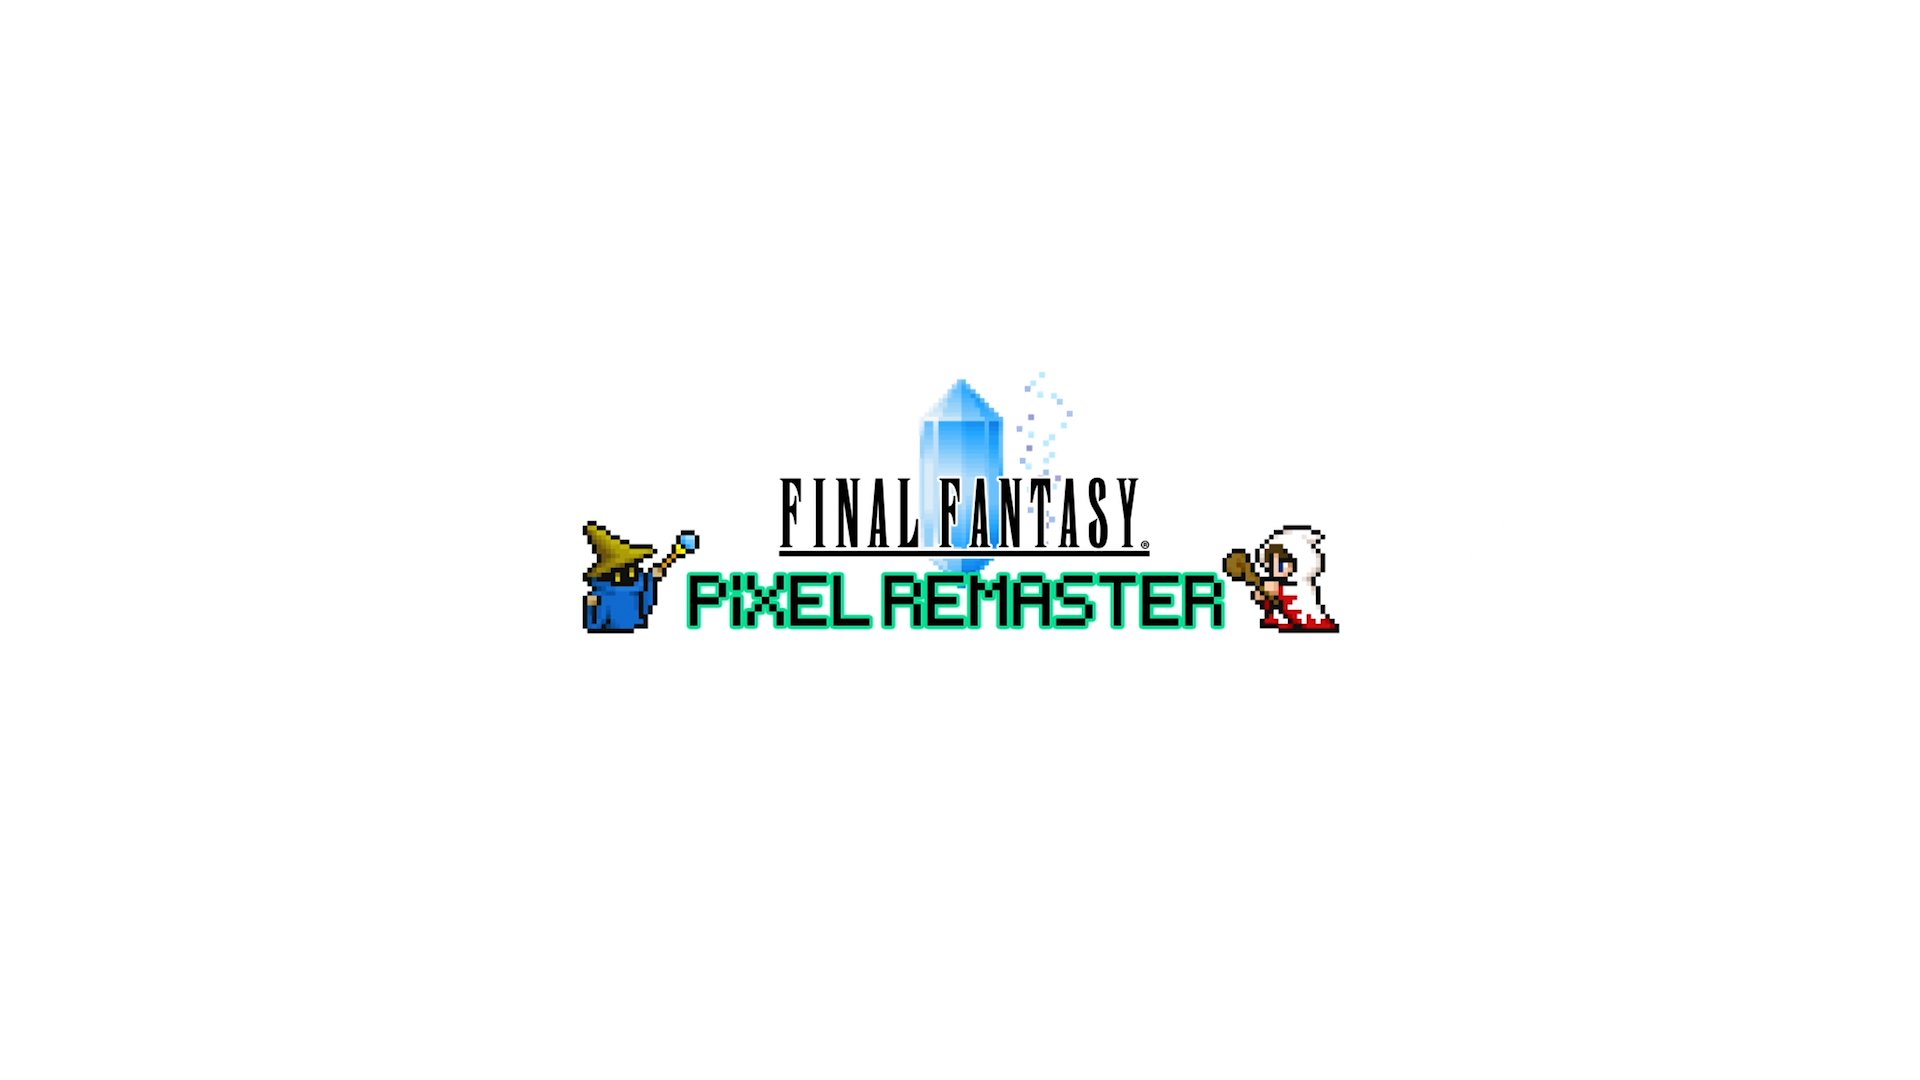 Steam :: Final Fantasy IV (3D Remake) :: FINAL FANTASY IV PATCH UPDATE FOR  PC!